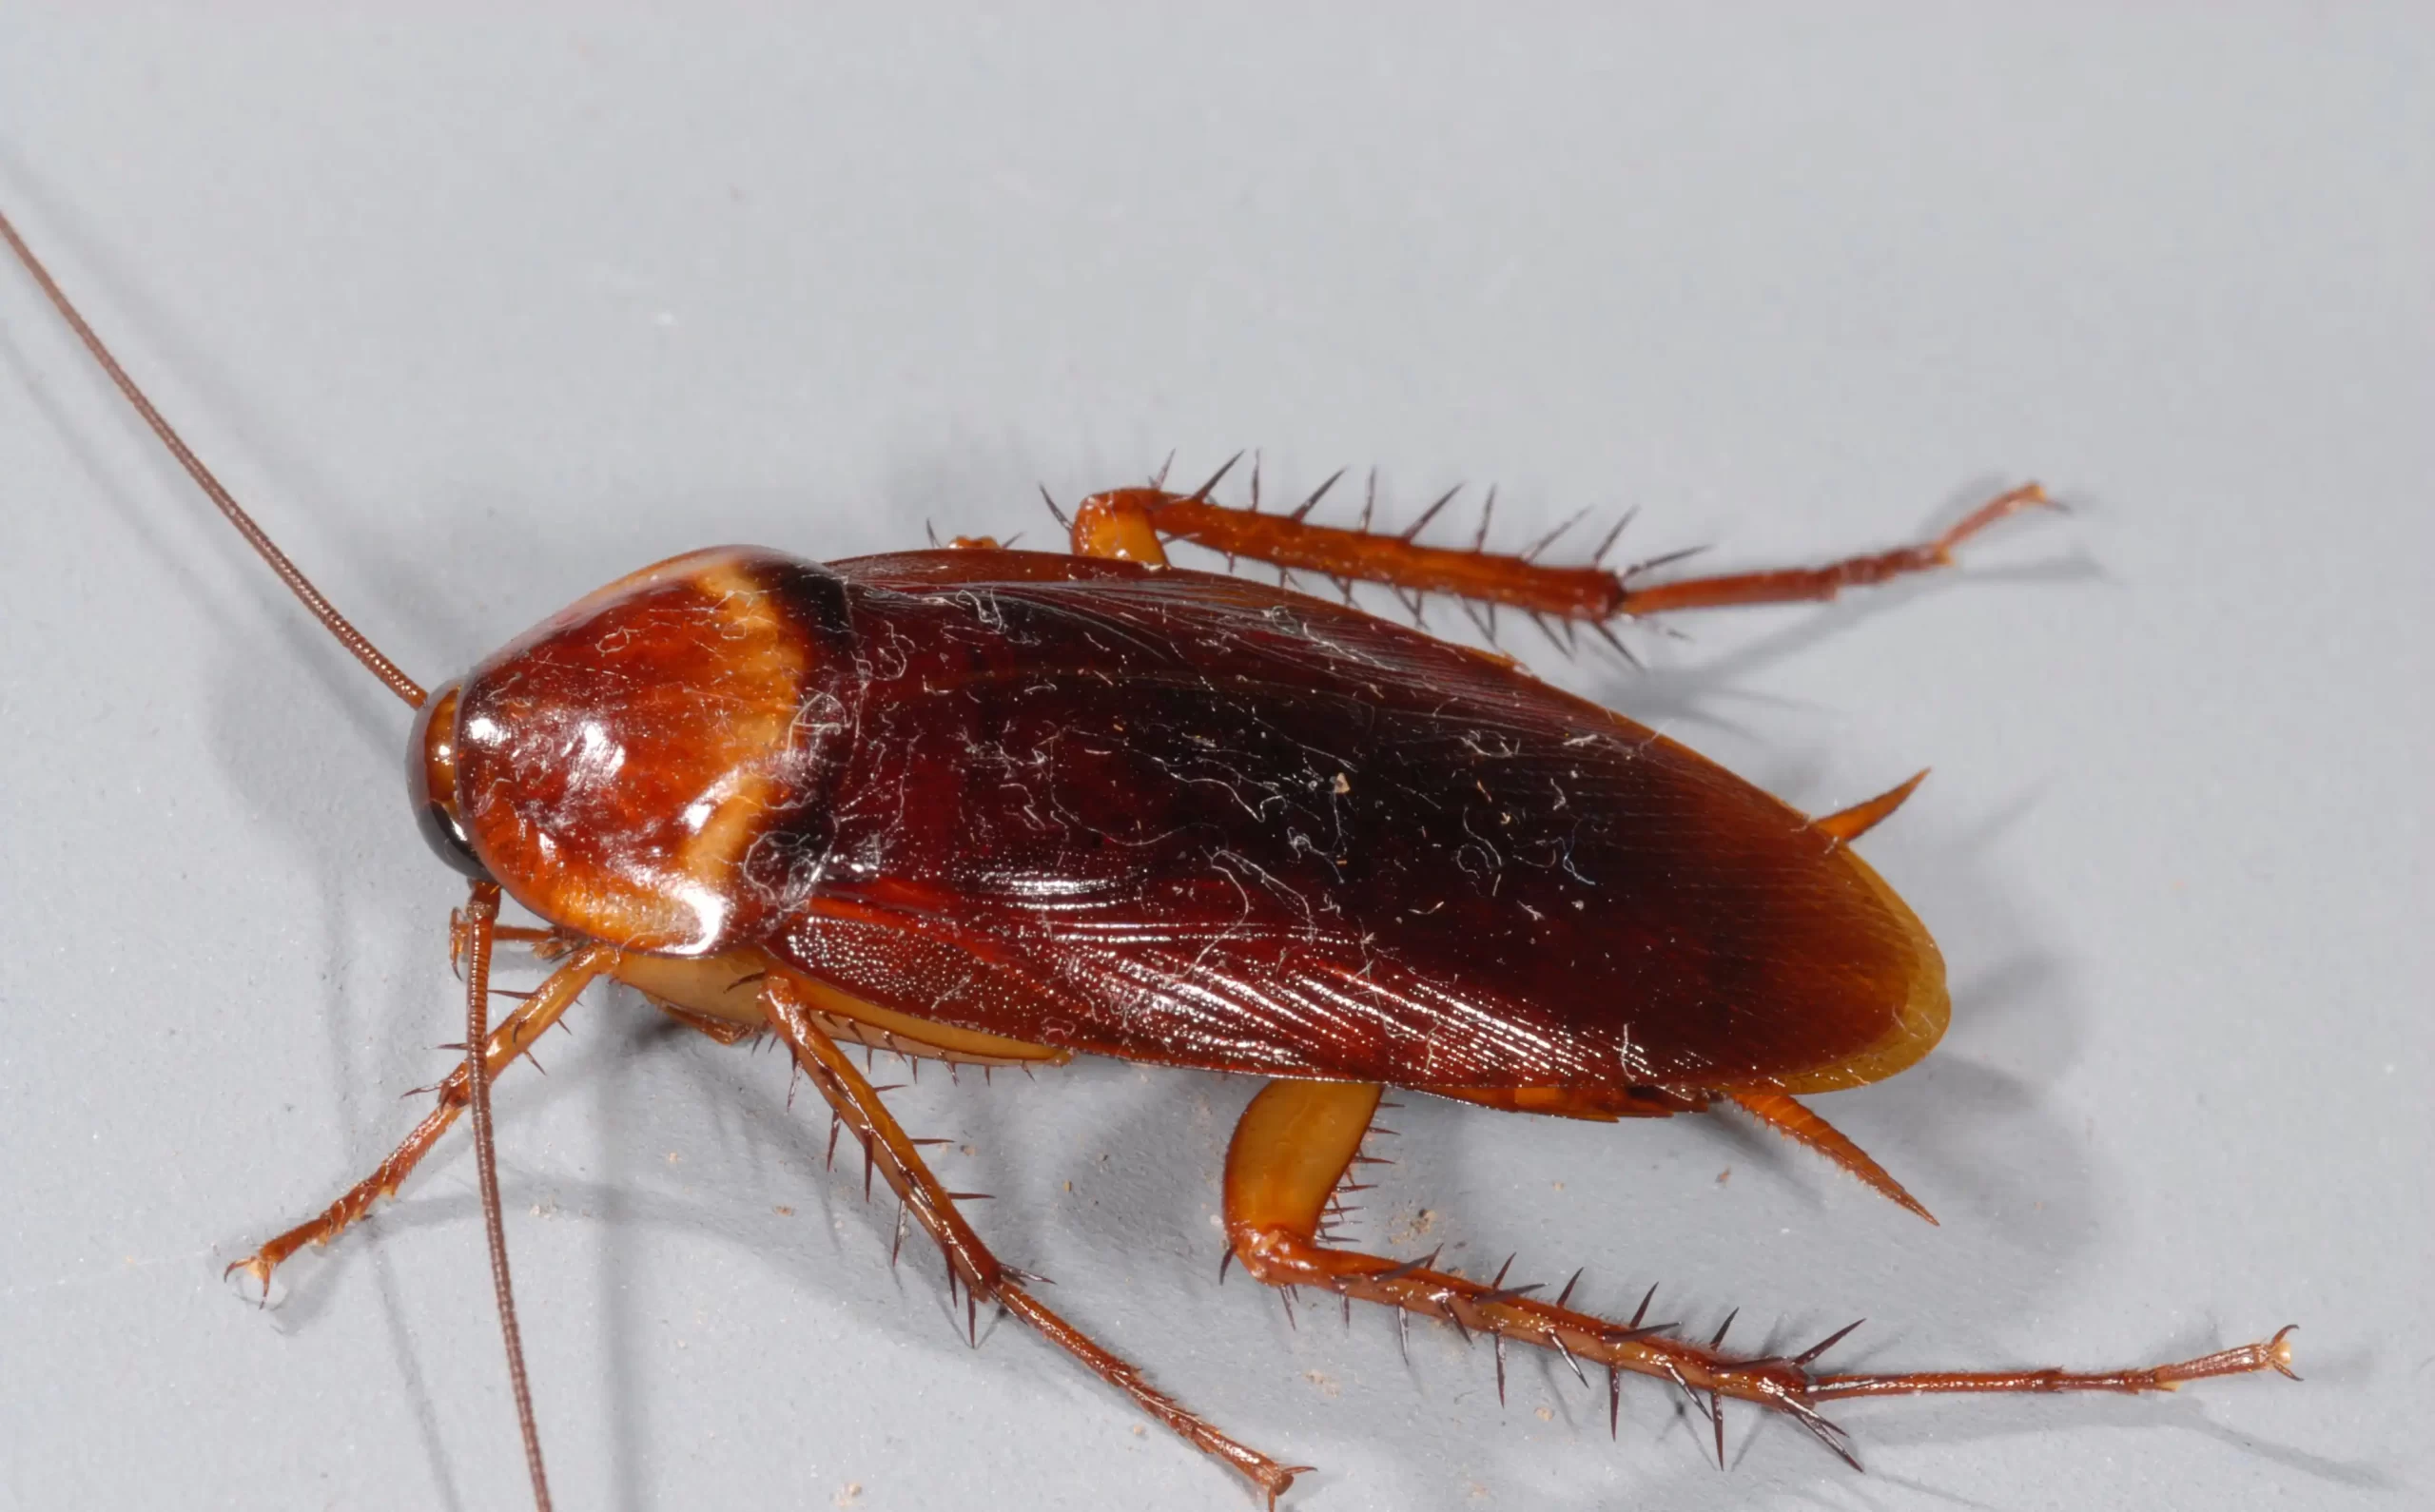 American Cockroach control melbourne